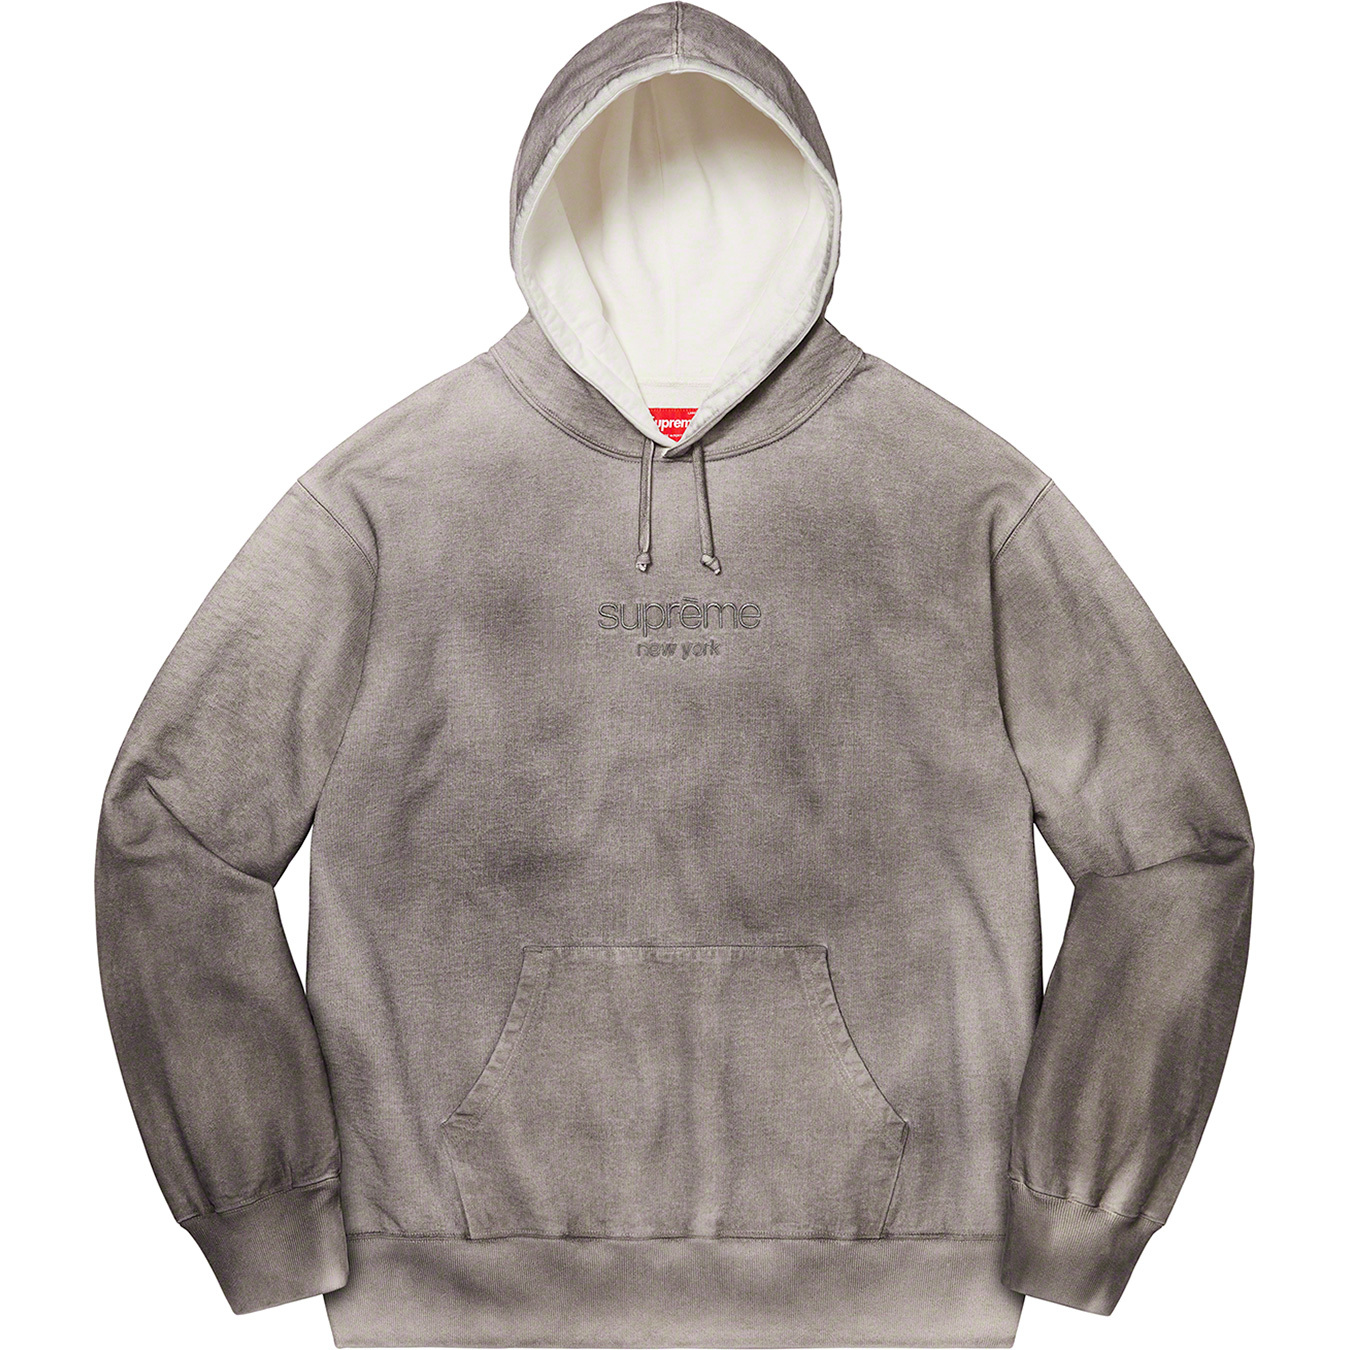 Spray Hooded Sweatshirt | Supreme 20fw